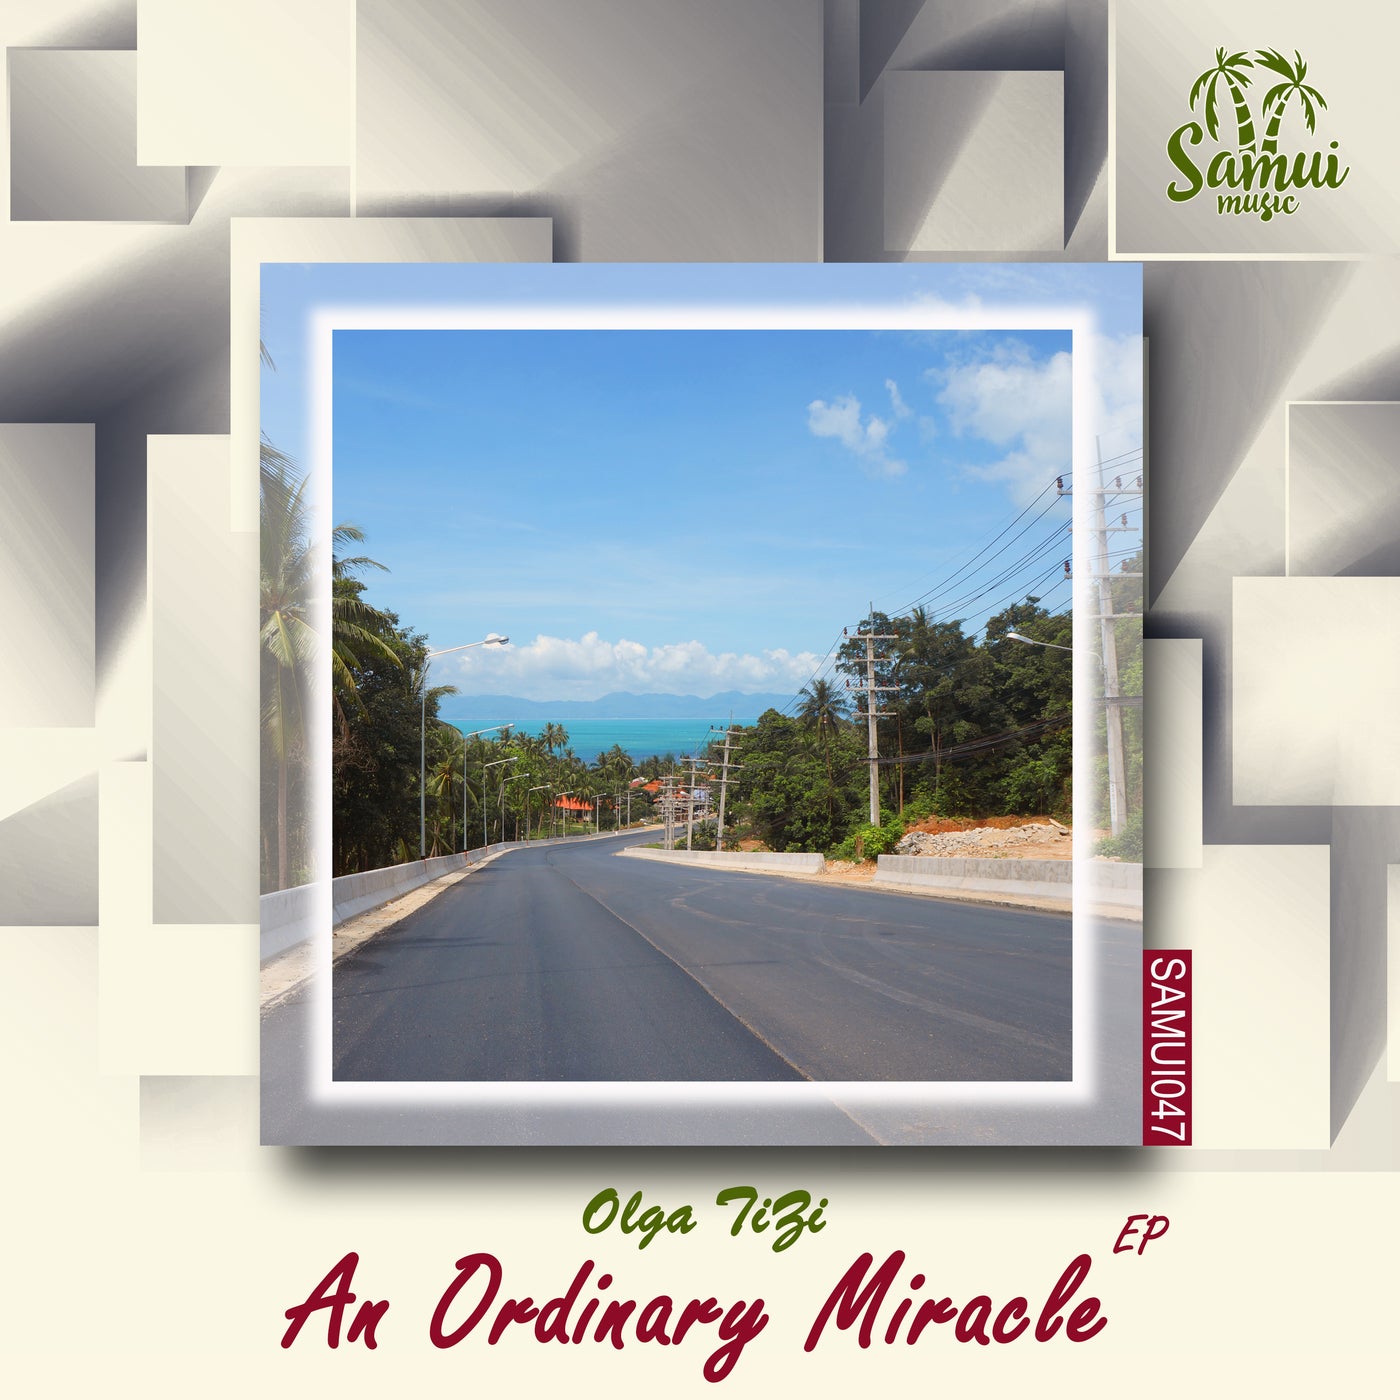 An Ordinary Miracle EP